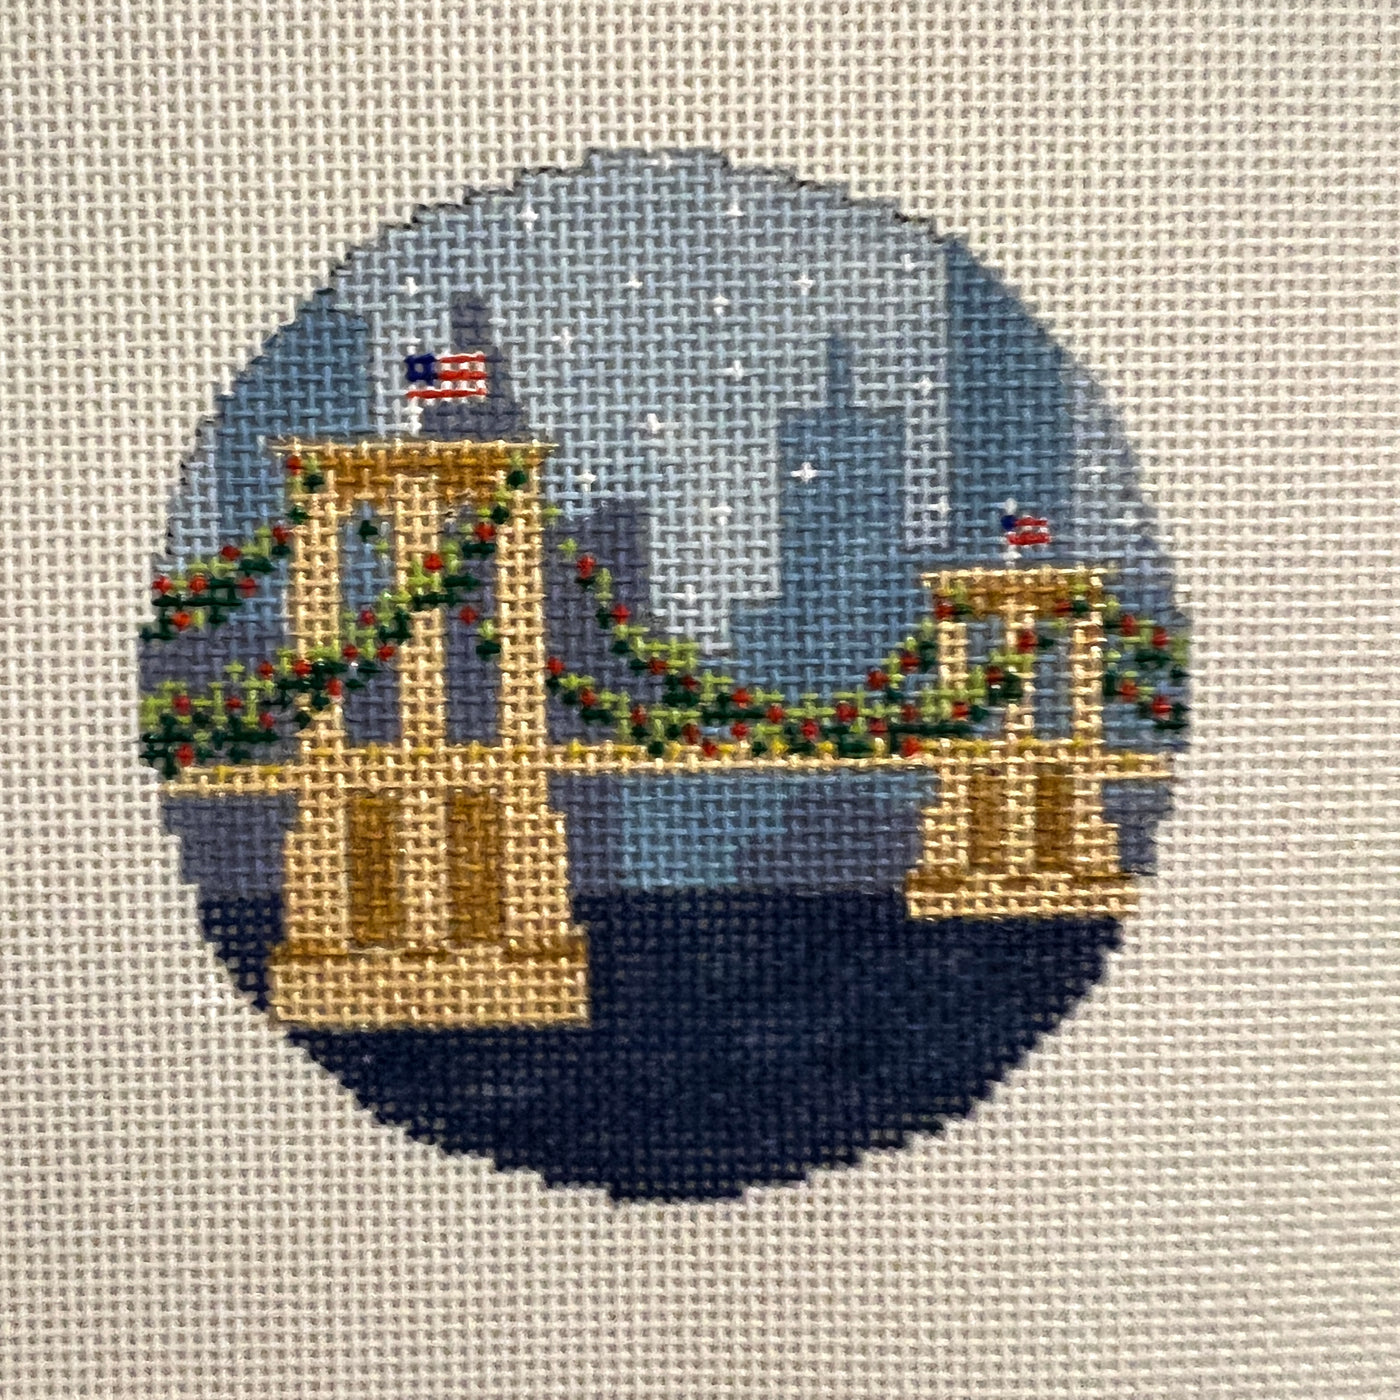 Brooklyn Bridge Holiday Ornament Needlepoint Canvas